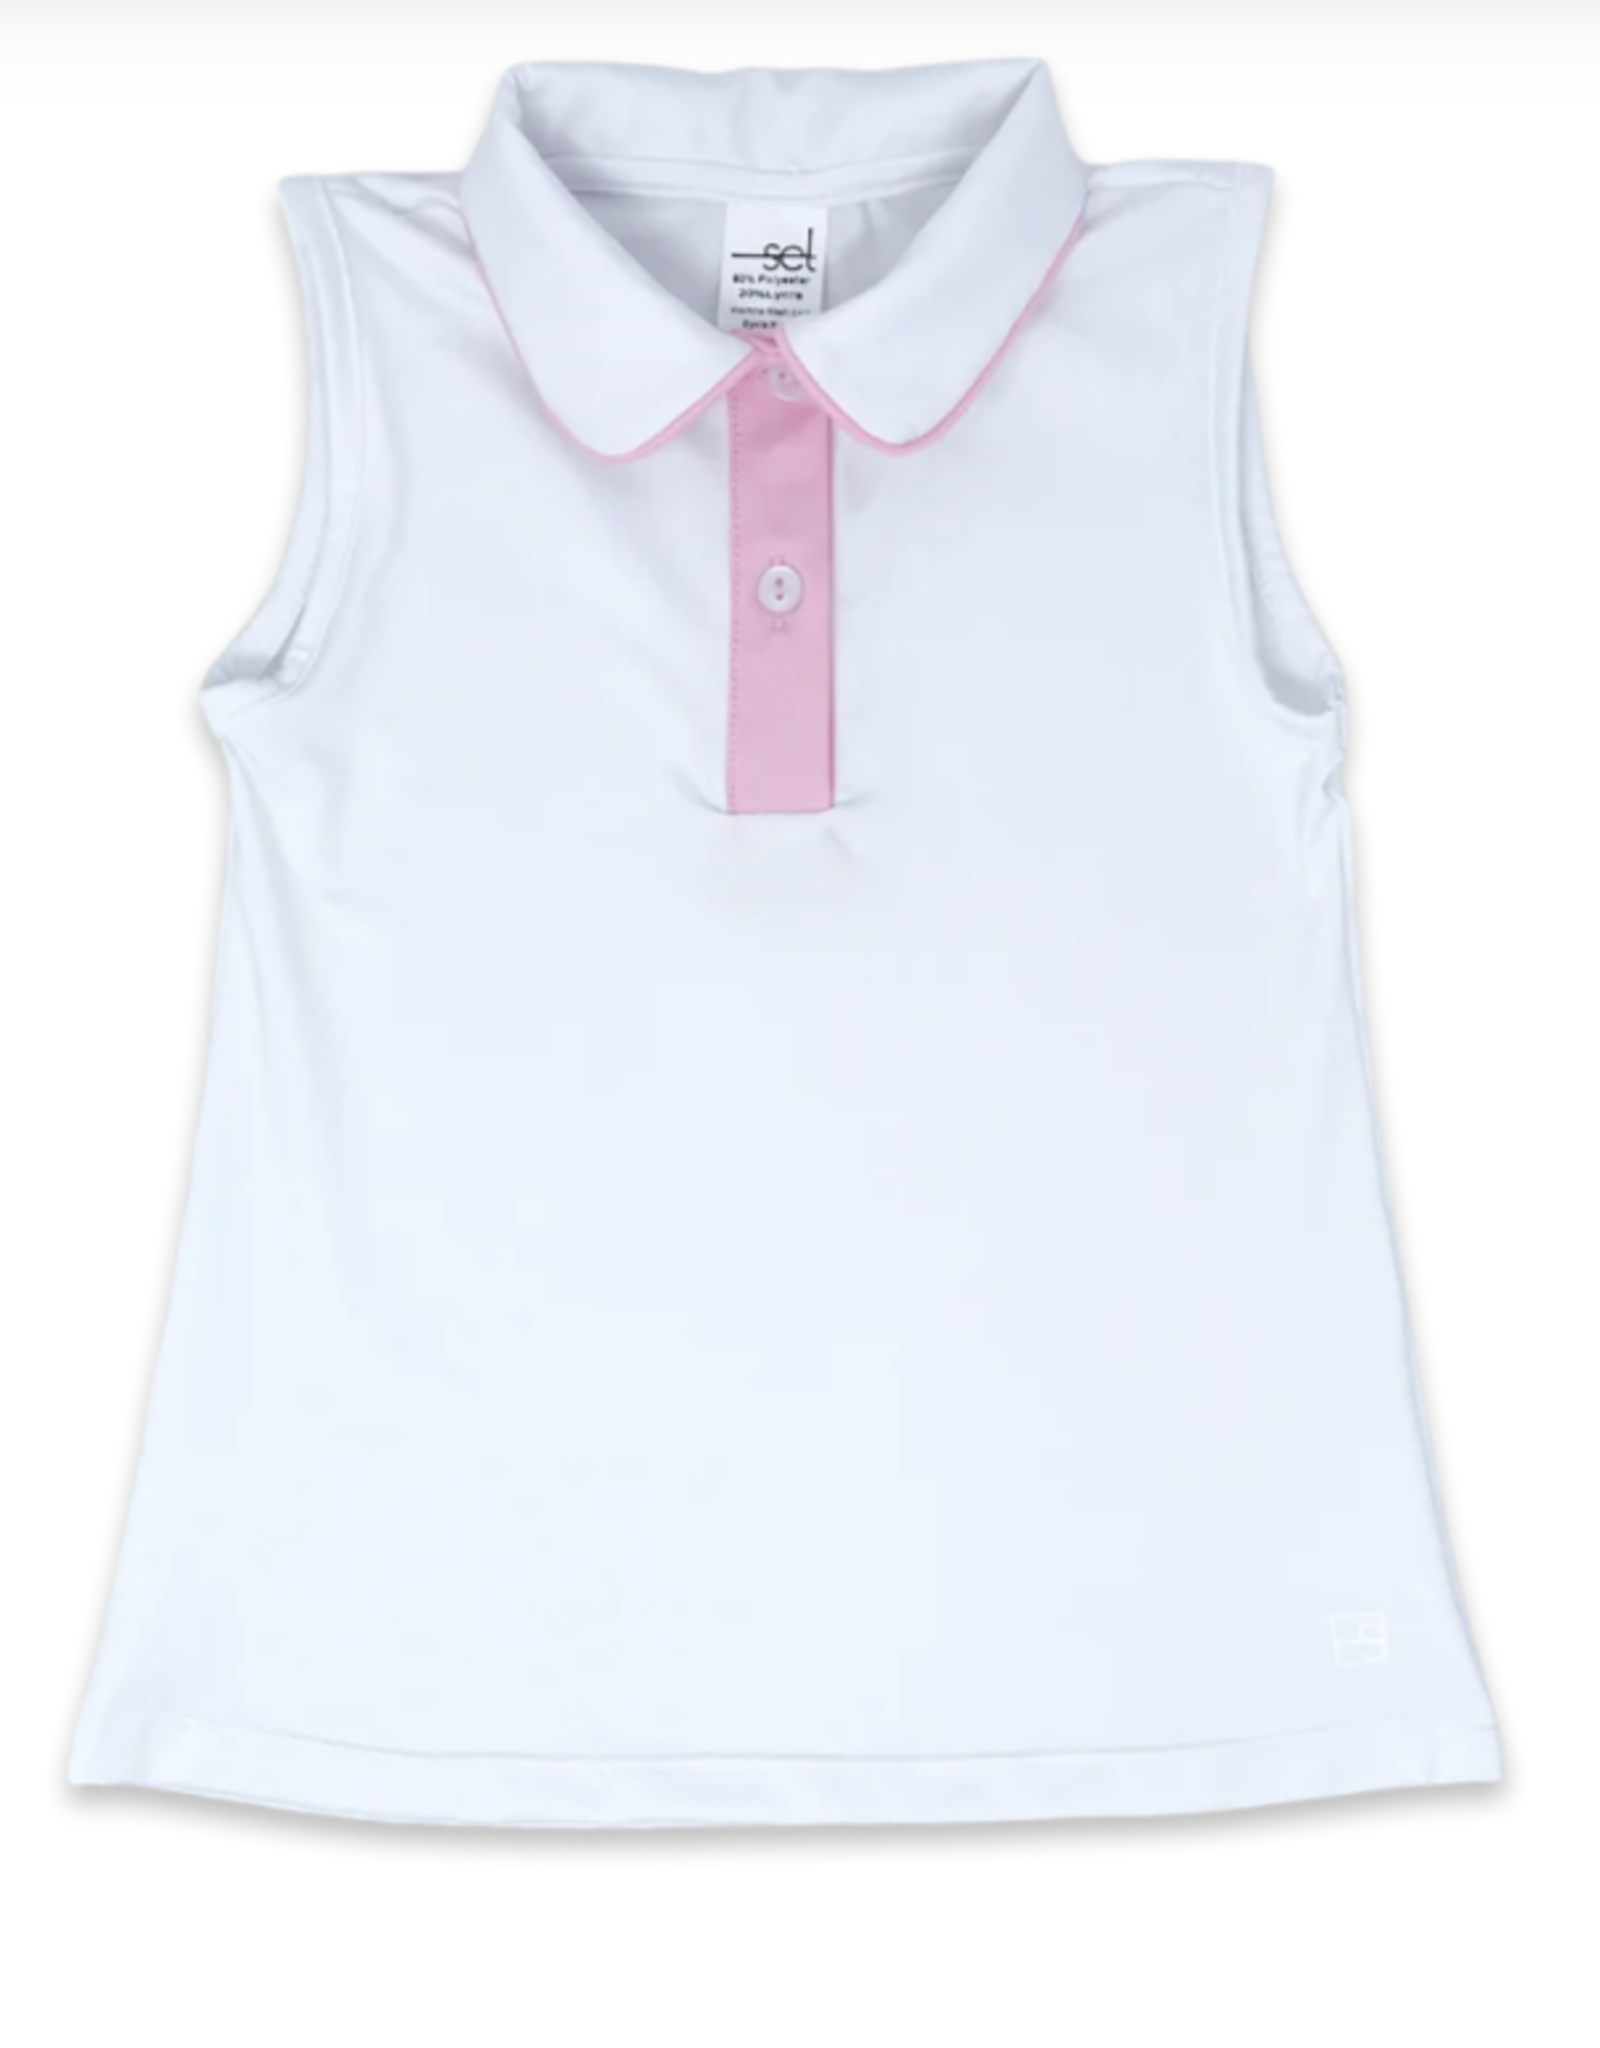 SET Gabby Shirt- Pure Coconut/Pink